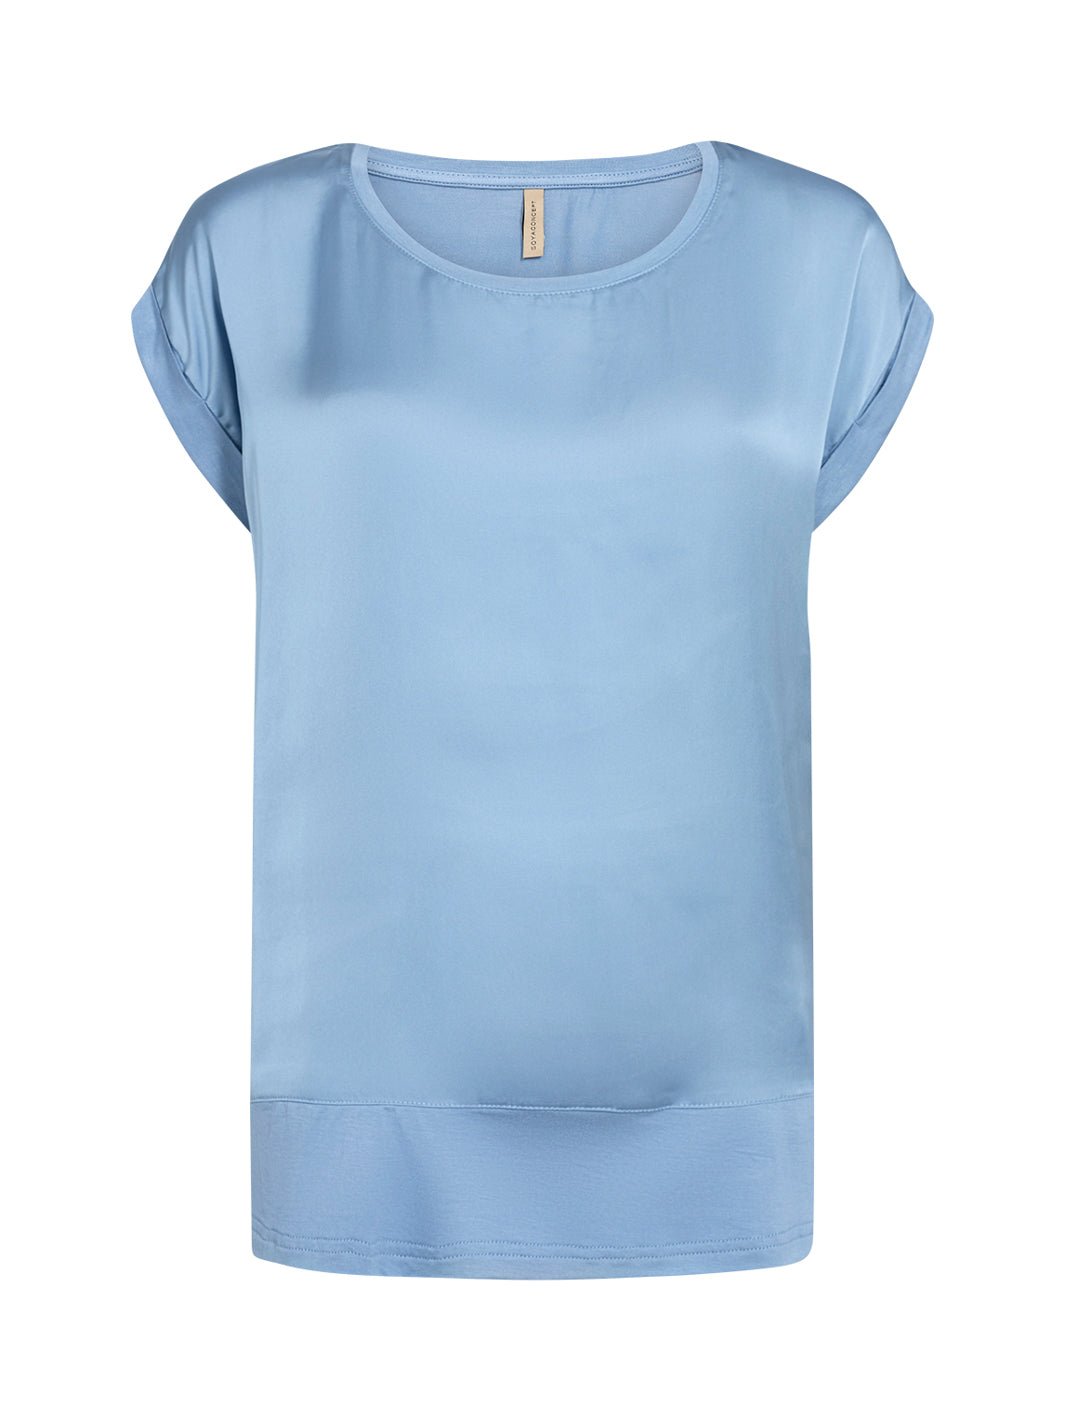 Soya Concept Thilde 6 t-shirt blue dust - Online-Mode